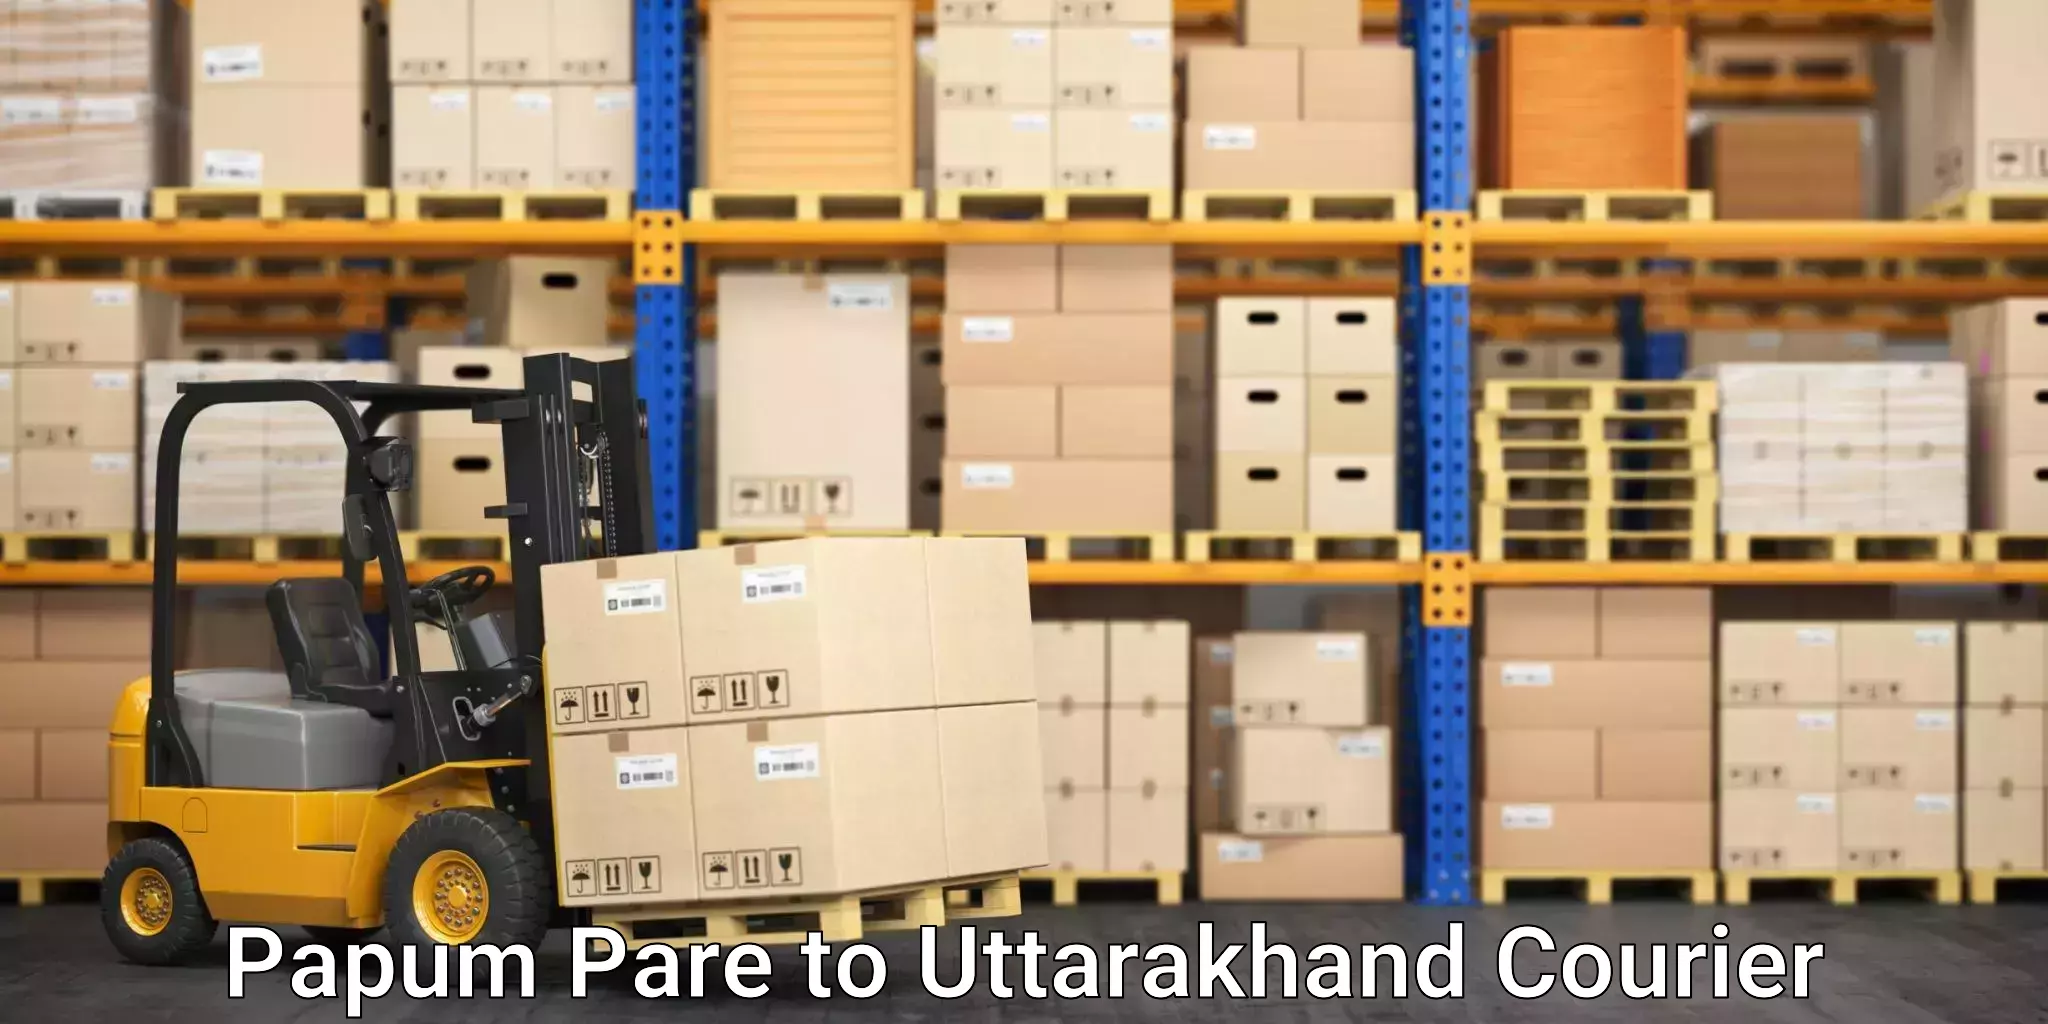 Courier service innovation Papum Pare to Uttarakhand